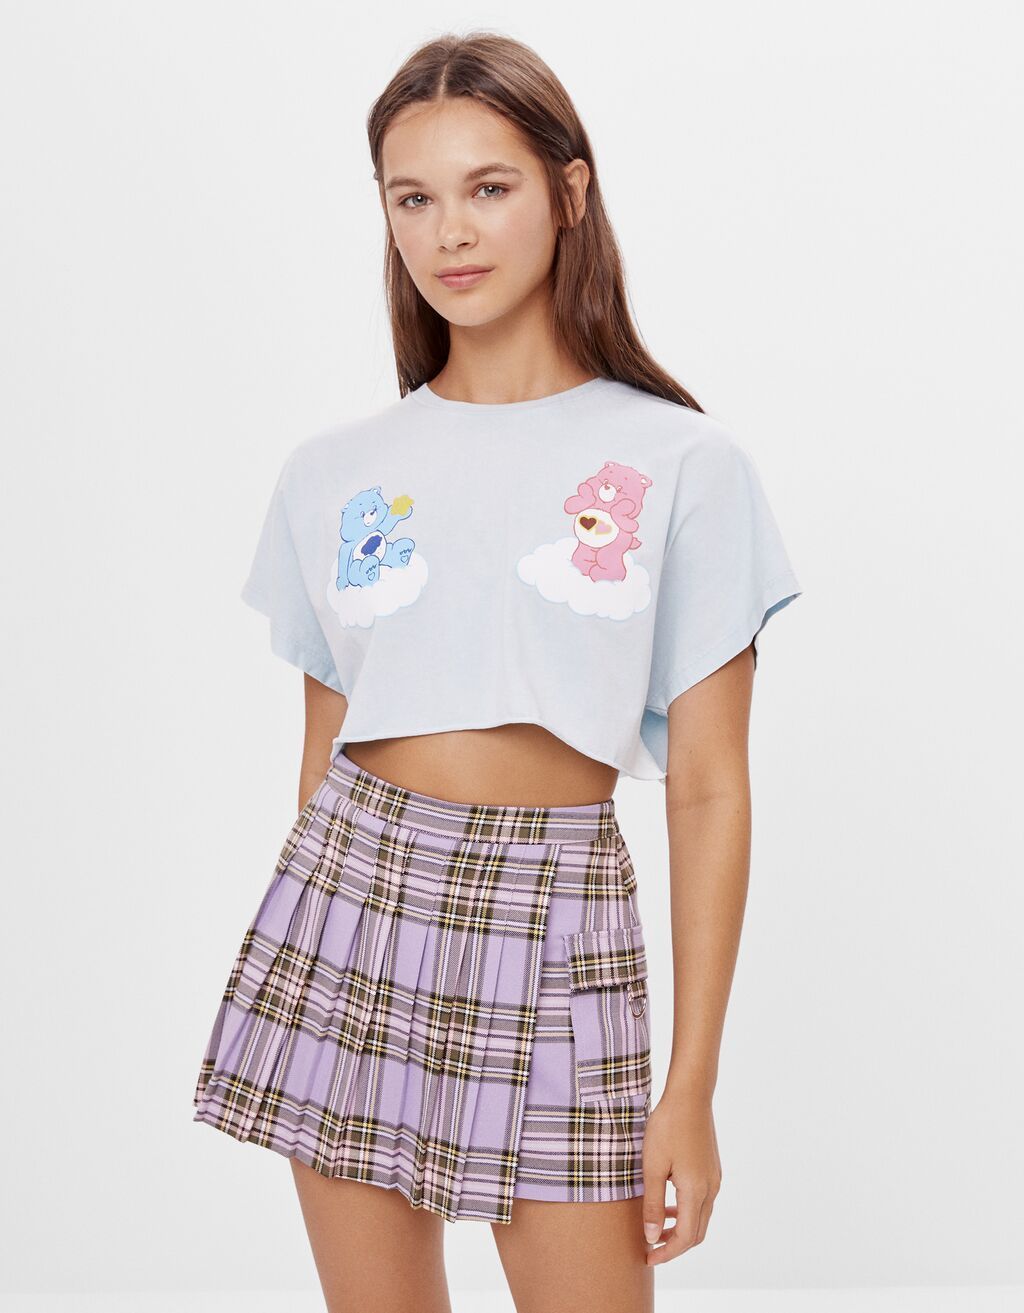 popular clothing brands for teenage girls